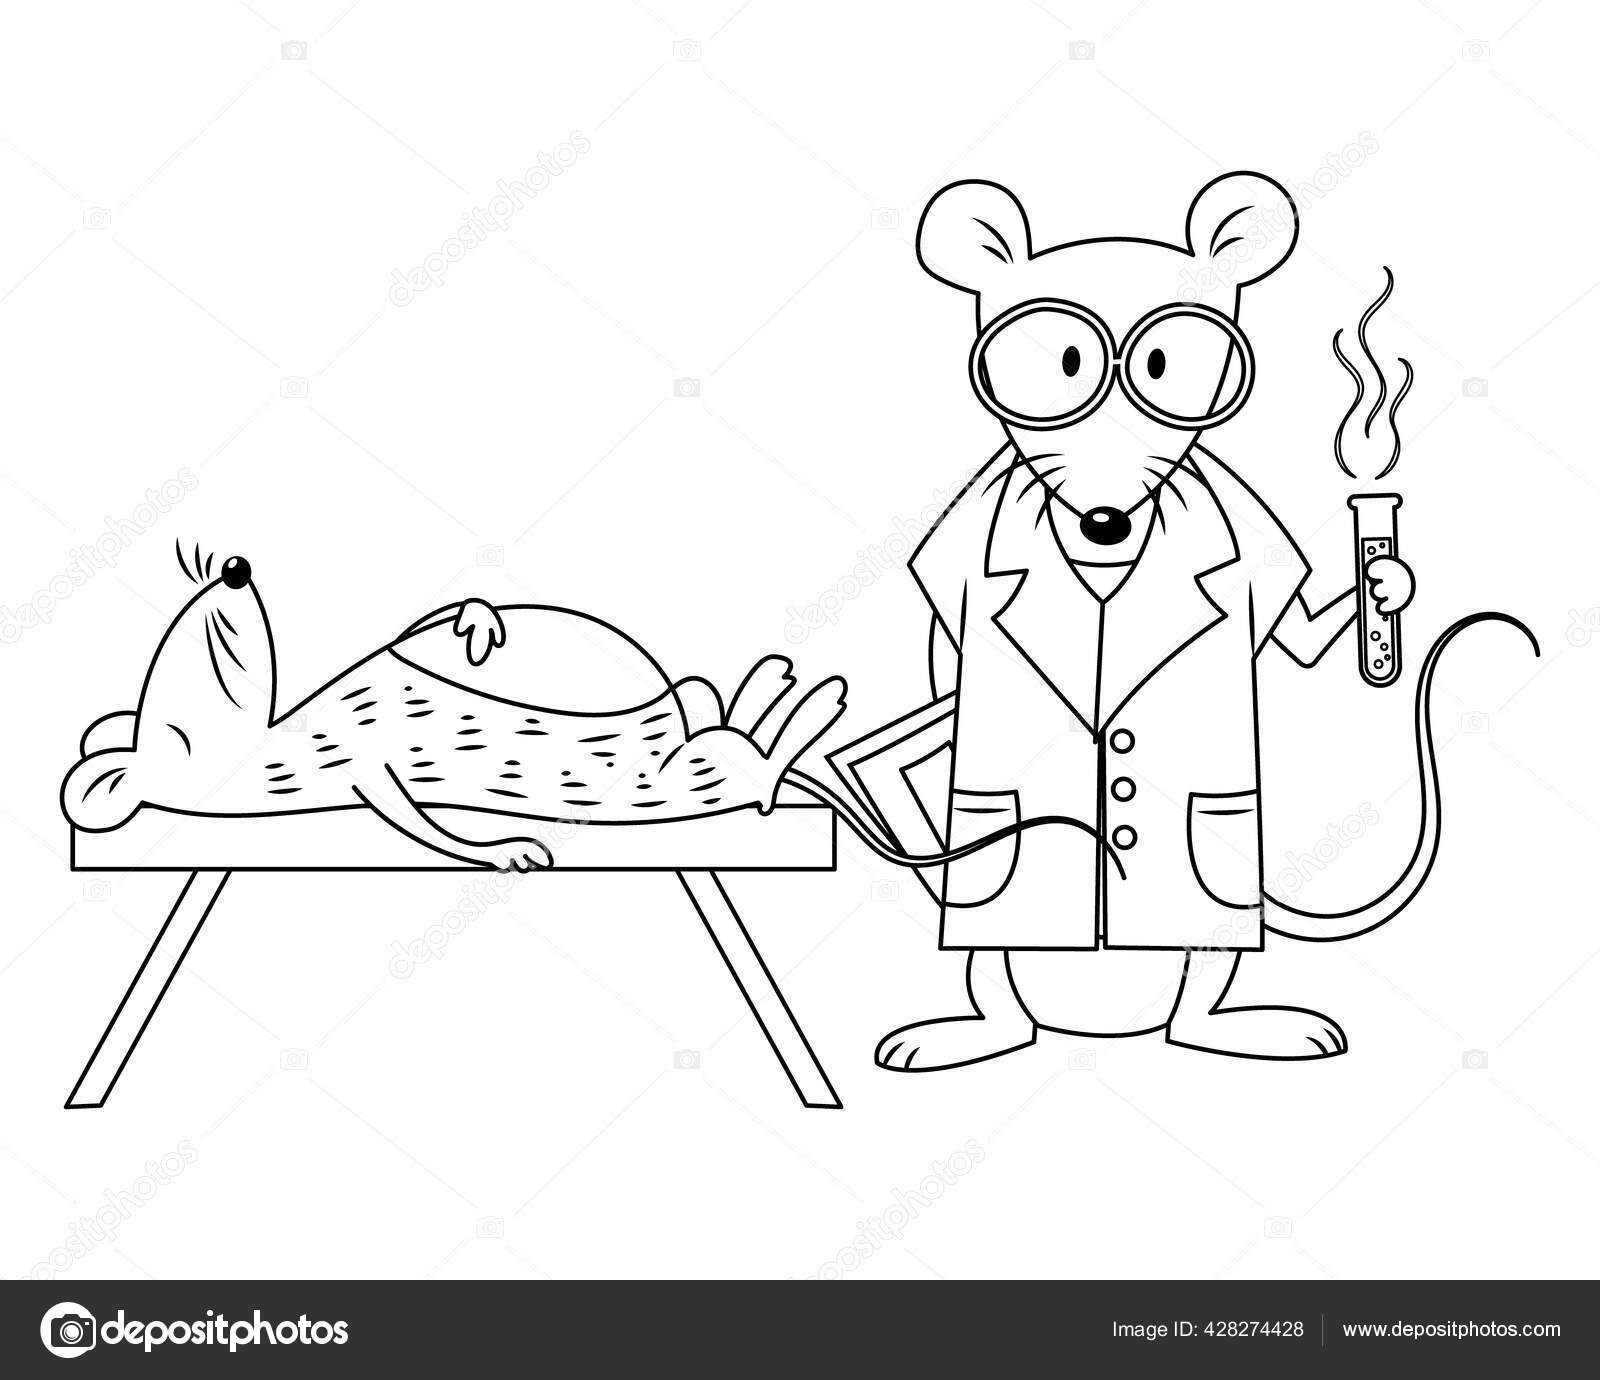 Un ratón muerto imágenes de stock de arte vectorial | Depositphotos